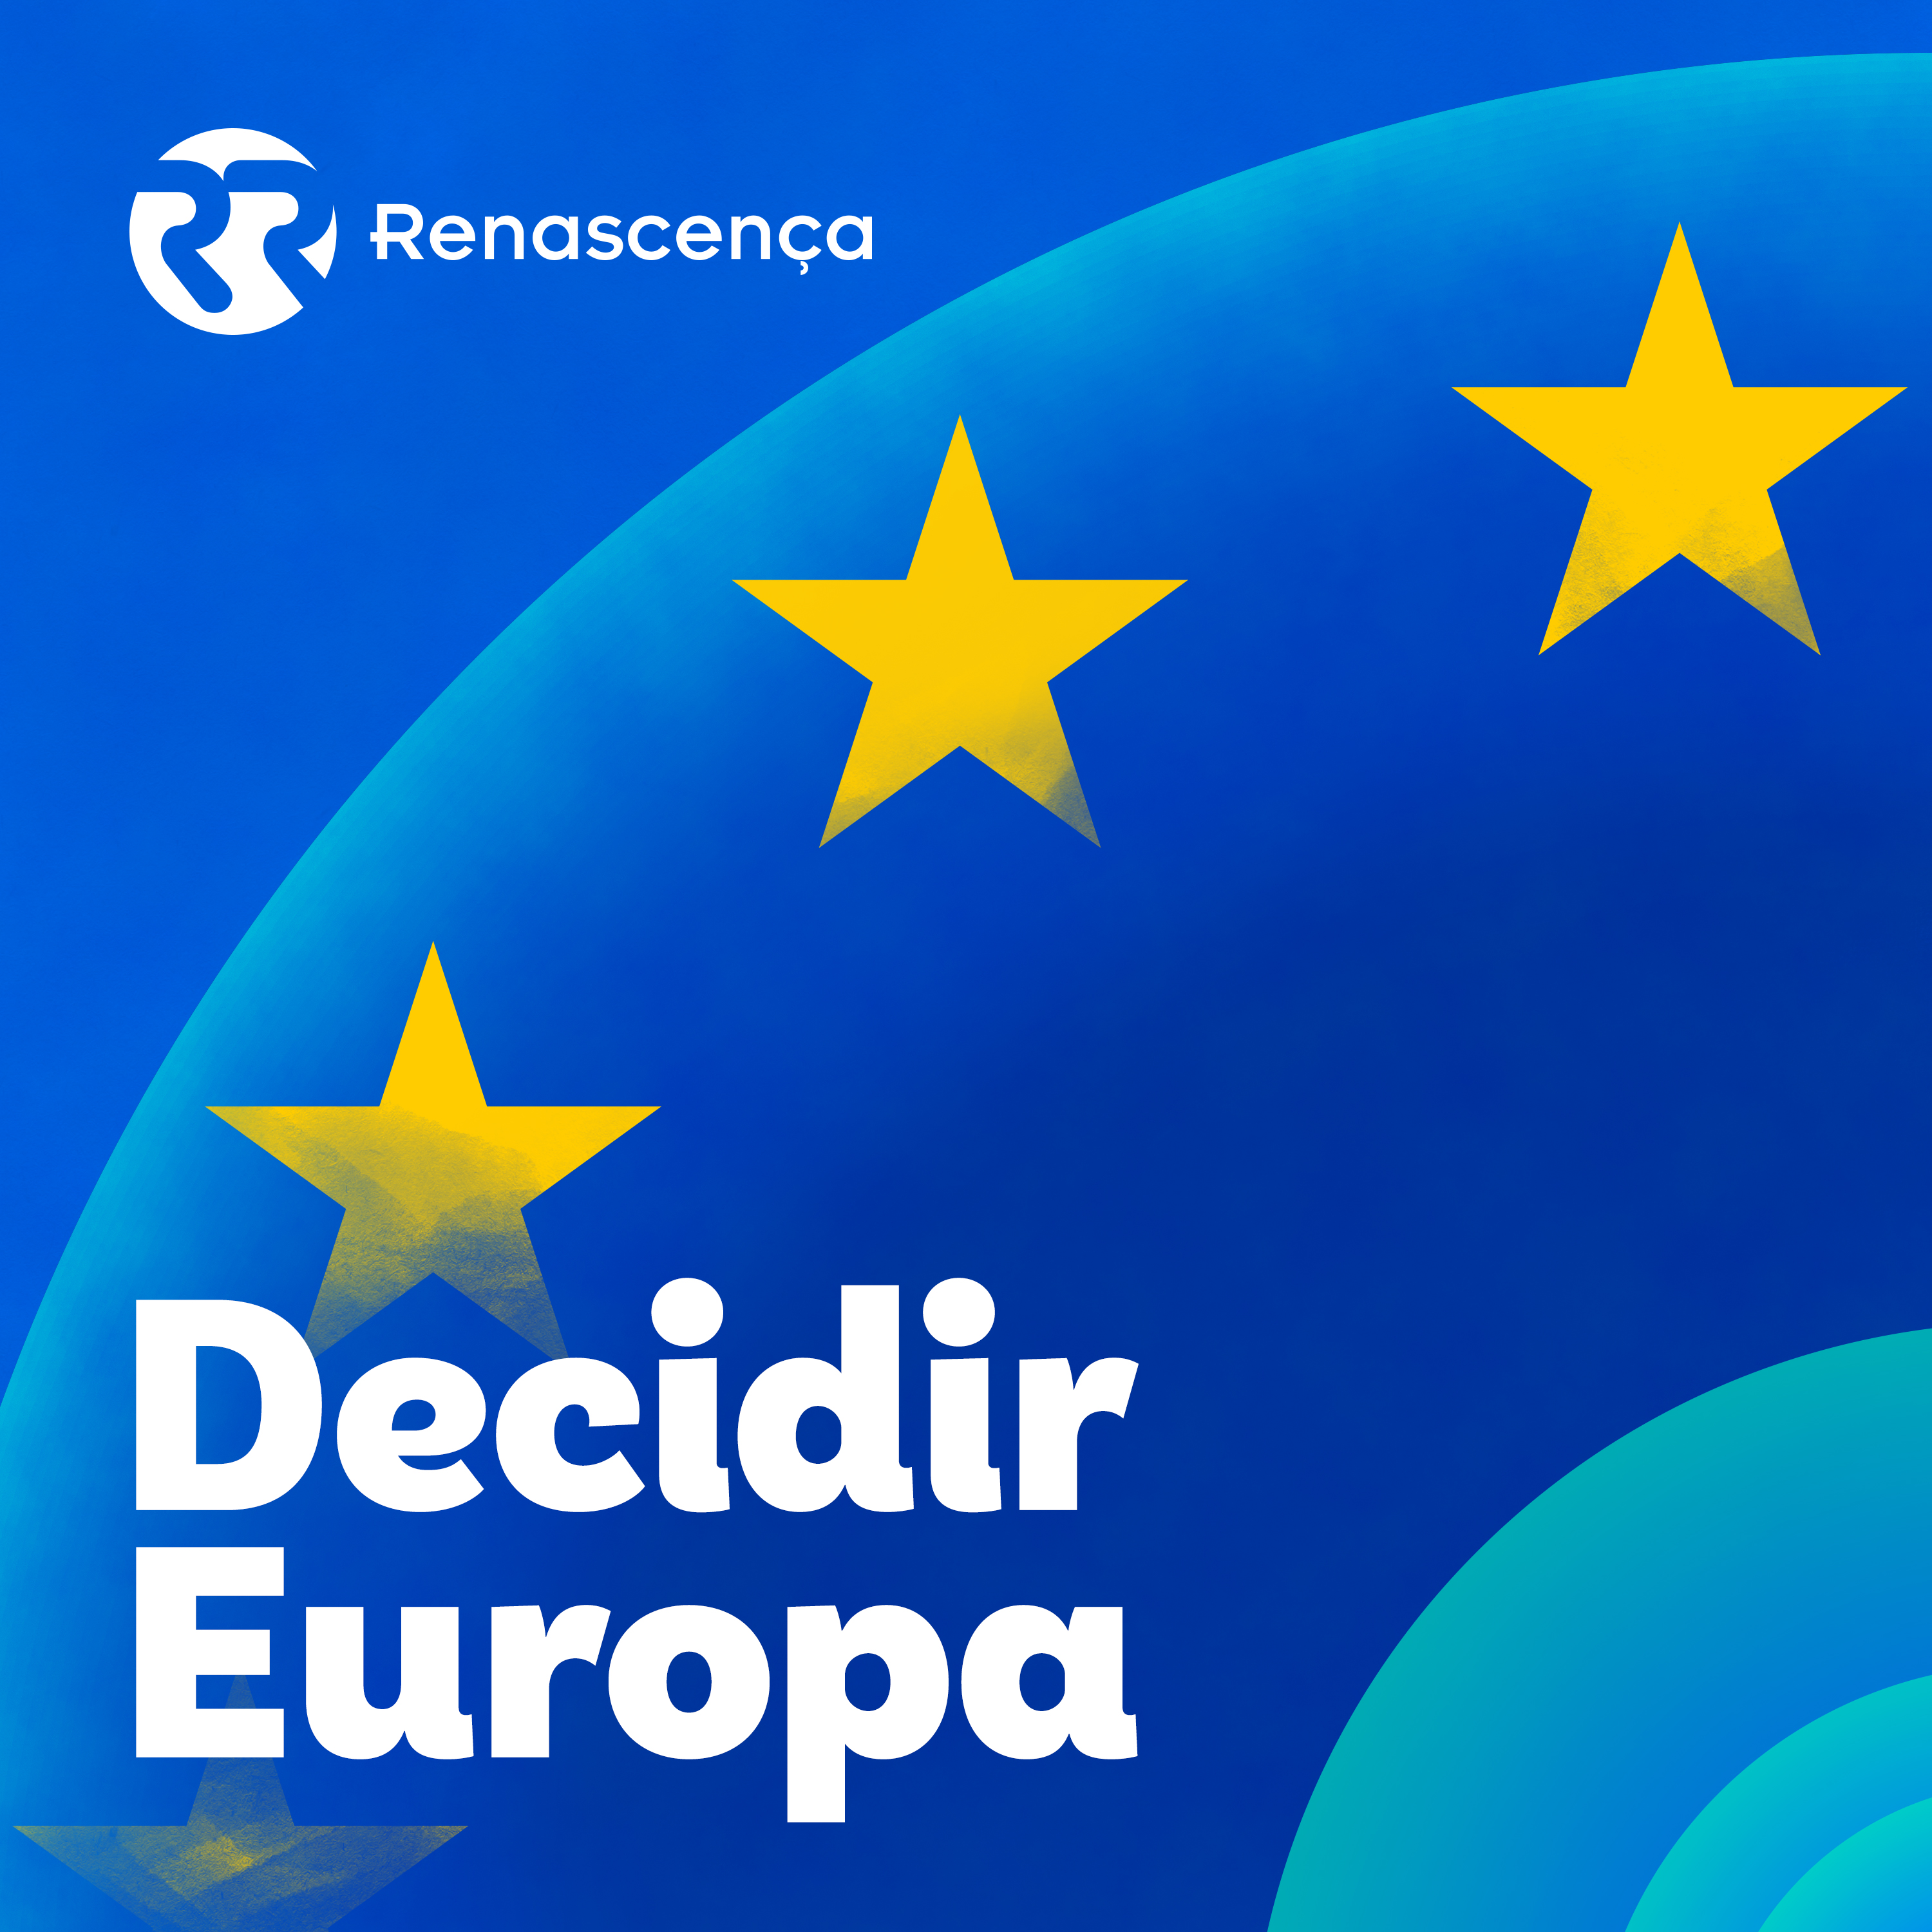 Decidir Europa - Carlos Coelho e o Coast4us - 04/06/2021